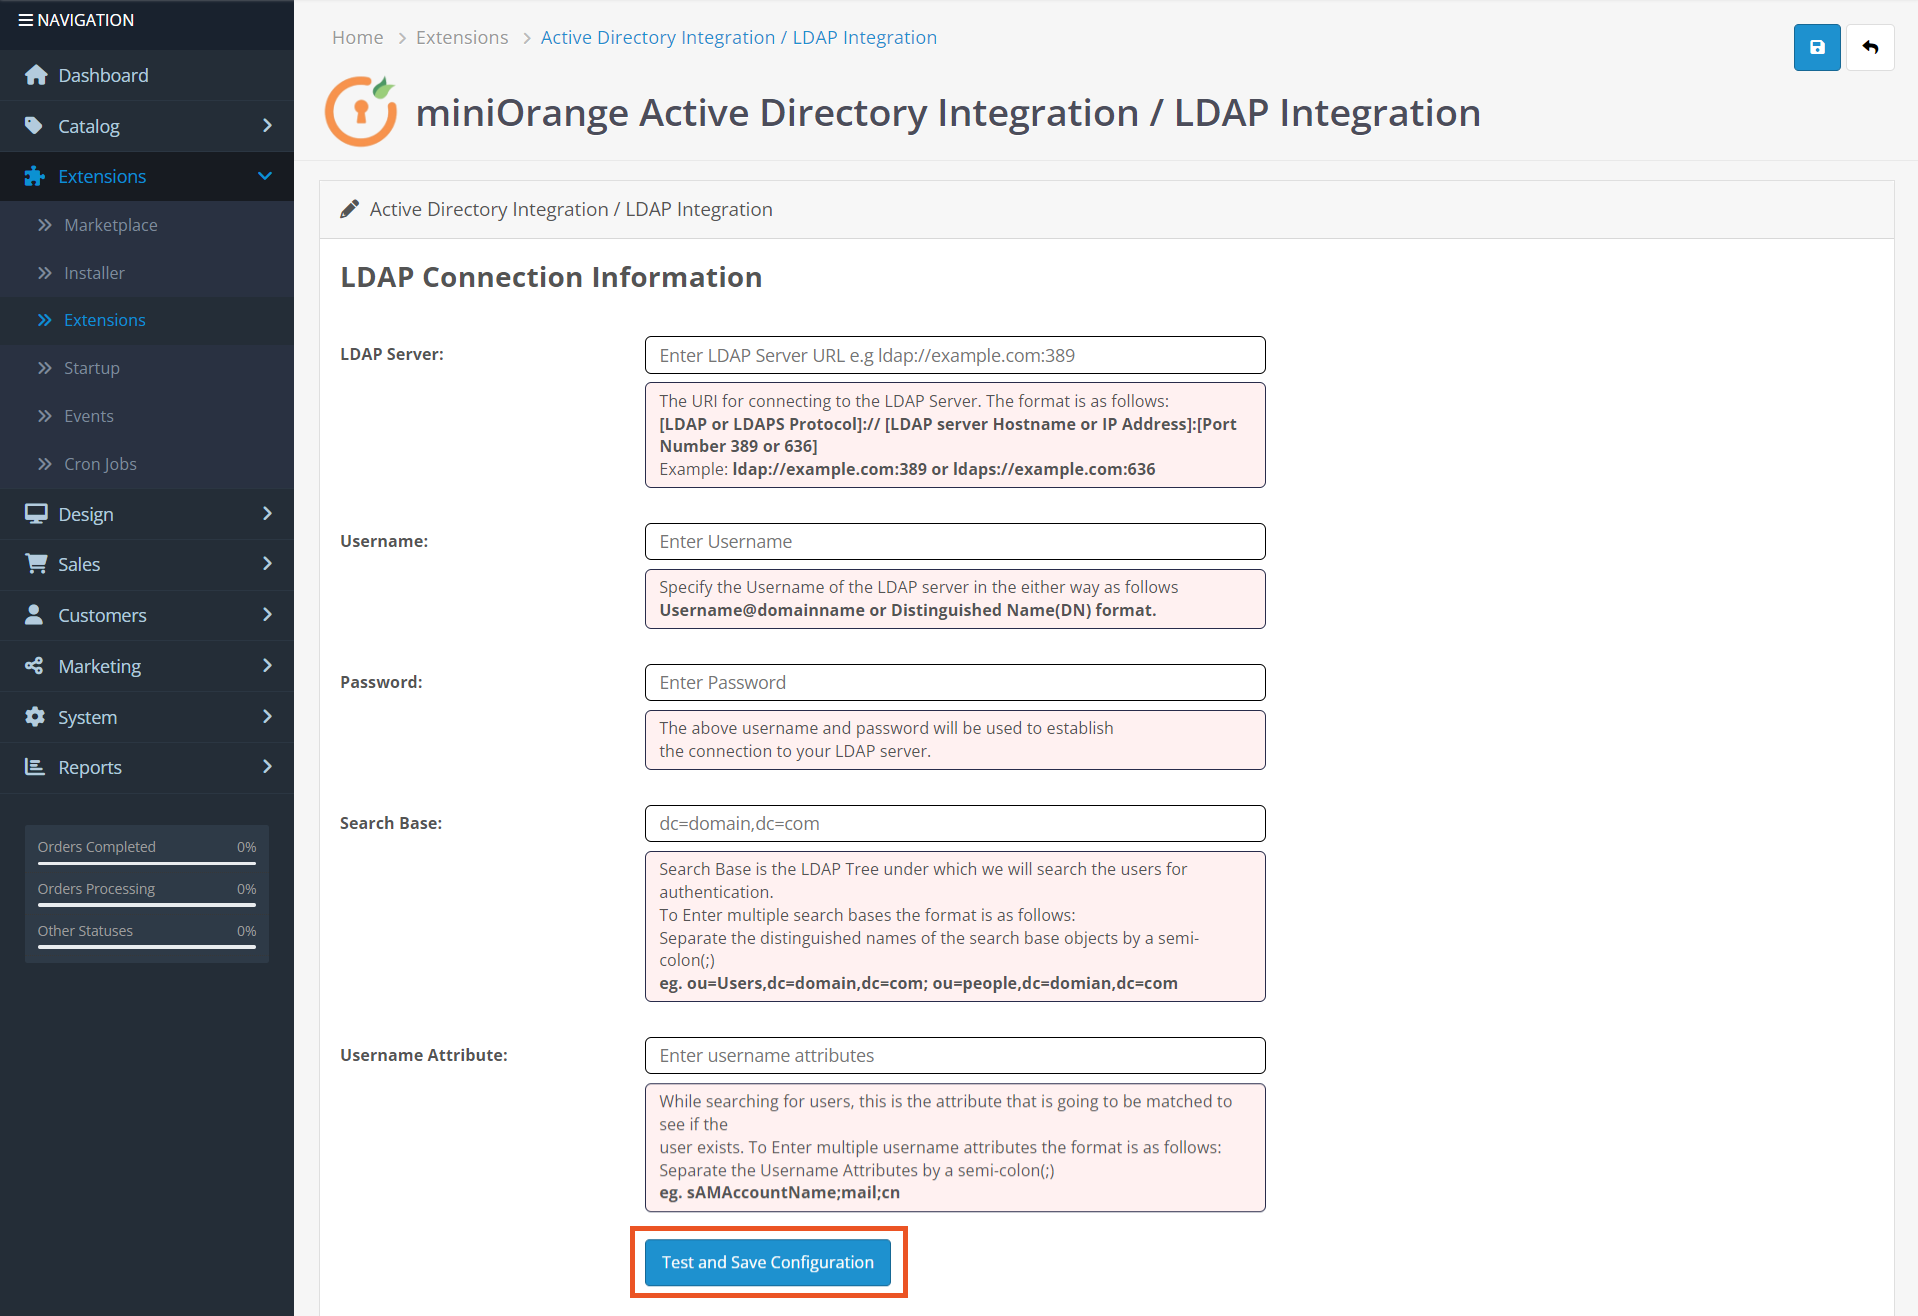 miniOrange LDAP Active Directory Login for Intranet Sites Plugin Configuration